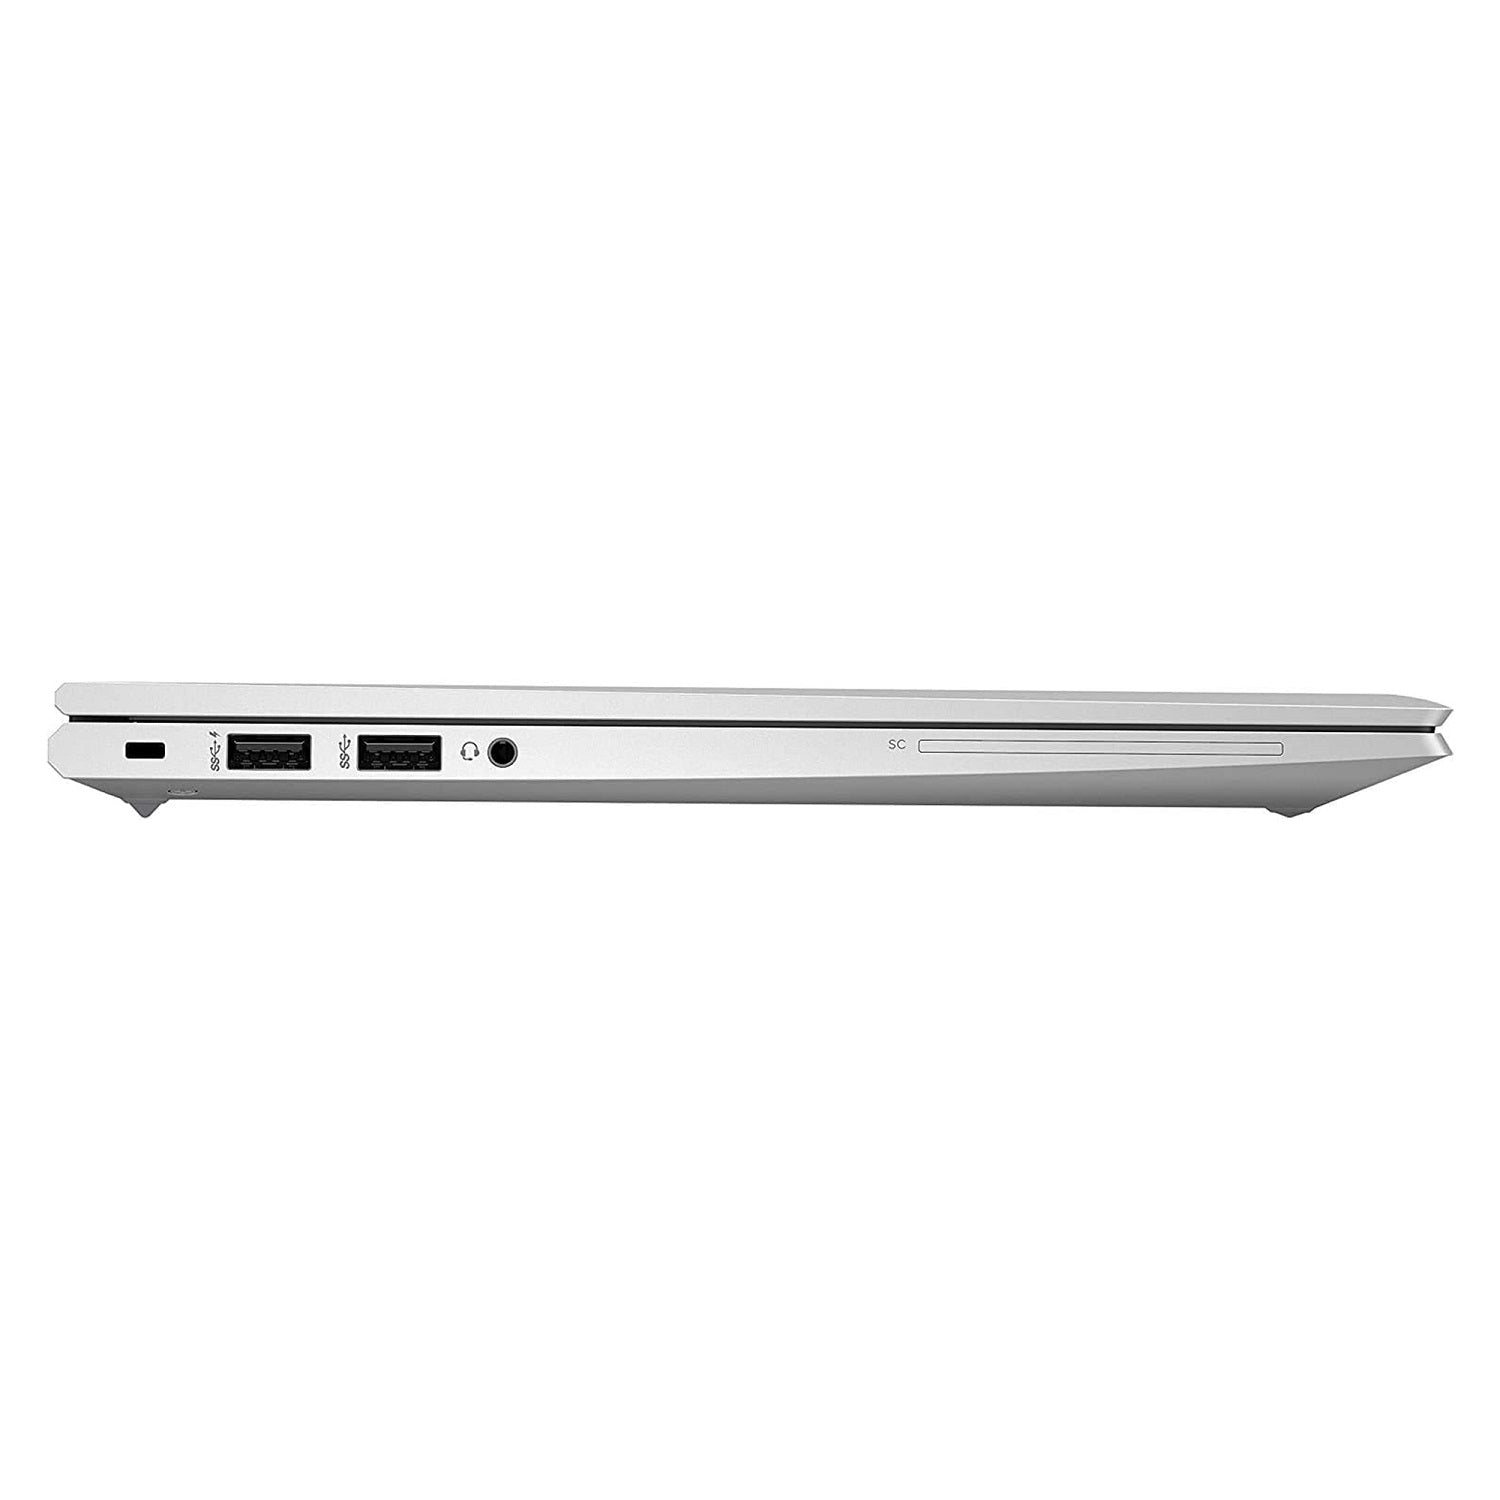 HP Laptop EliteBook 840 G7 - Anti Glare FHD 14-inch Touch/ Non-Touch Screen (Intel i7 Hexa-Core 10810U CPU/ 16GB DDR4 RAM/ 256GB - 1TB SSD/ Windows 11 Pro/ Backlit Keyboard/ HDMI) - Refurbished